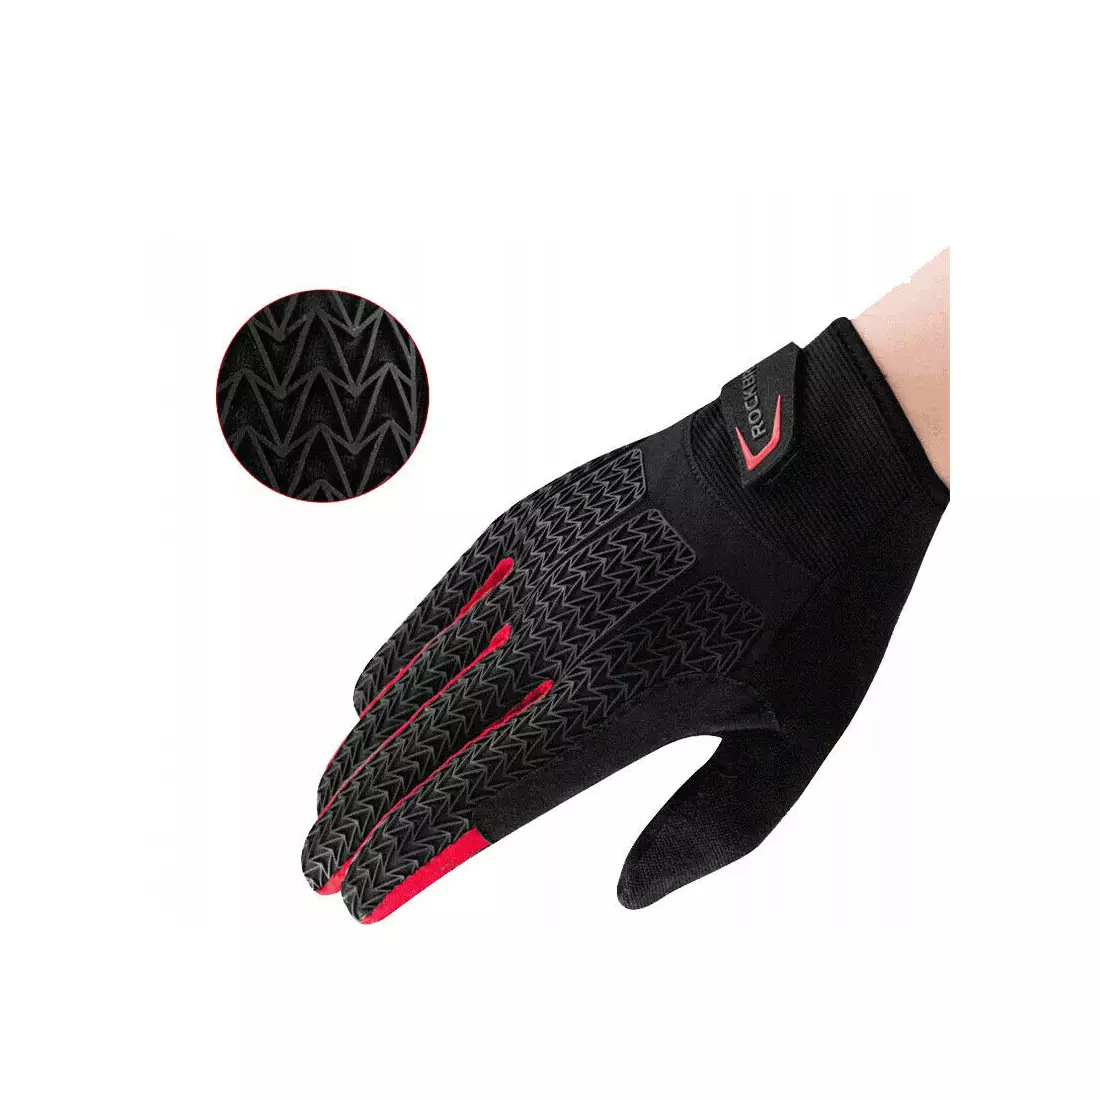 Rockbros mănuși de ciclism, gel, negru-roșu S169-1BR